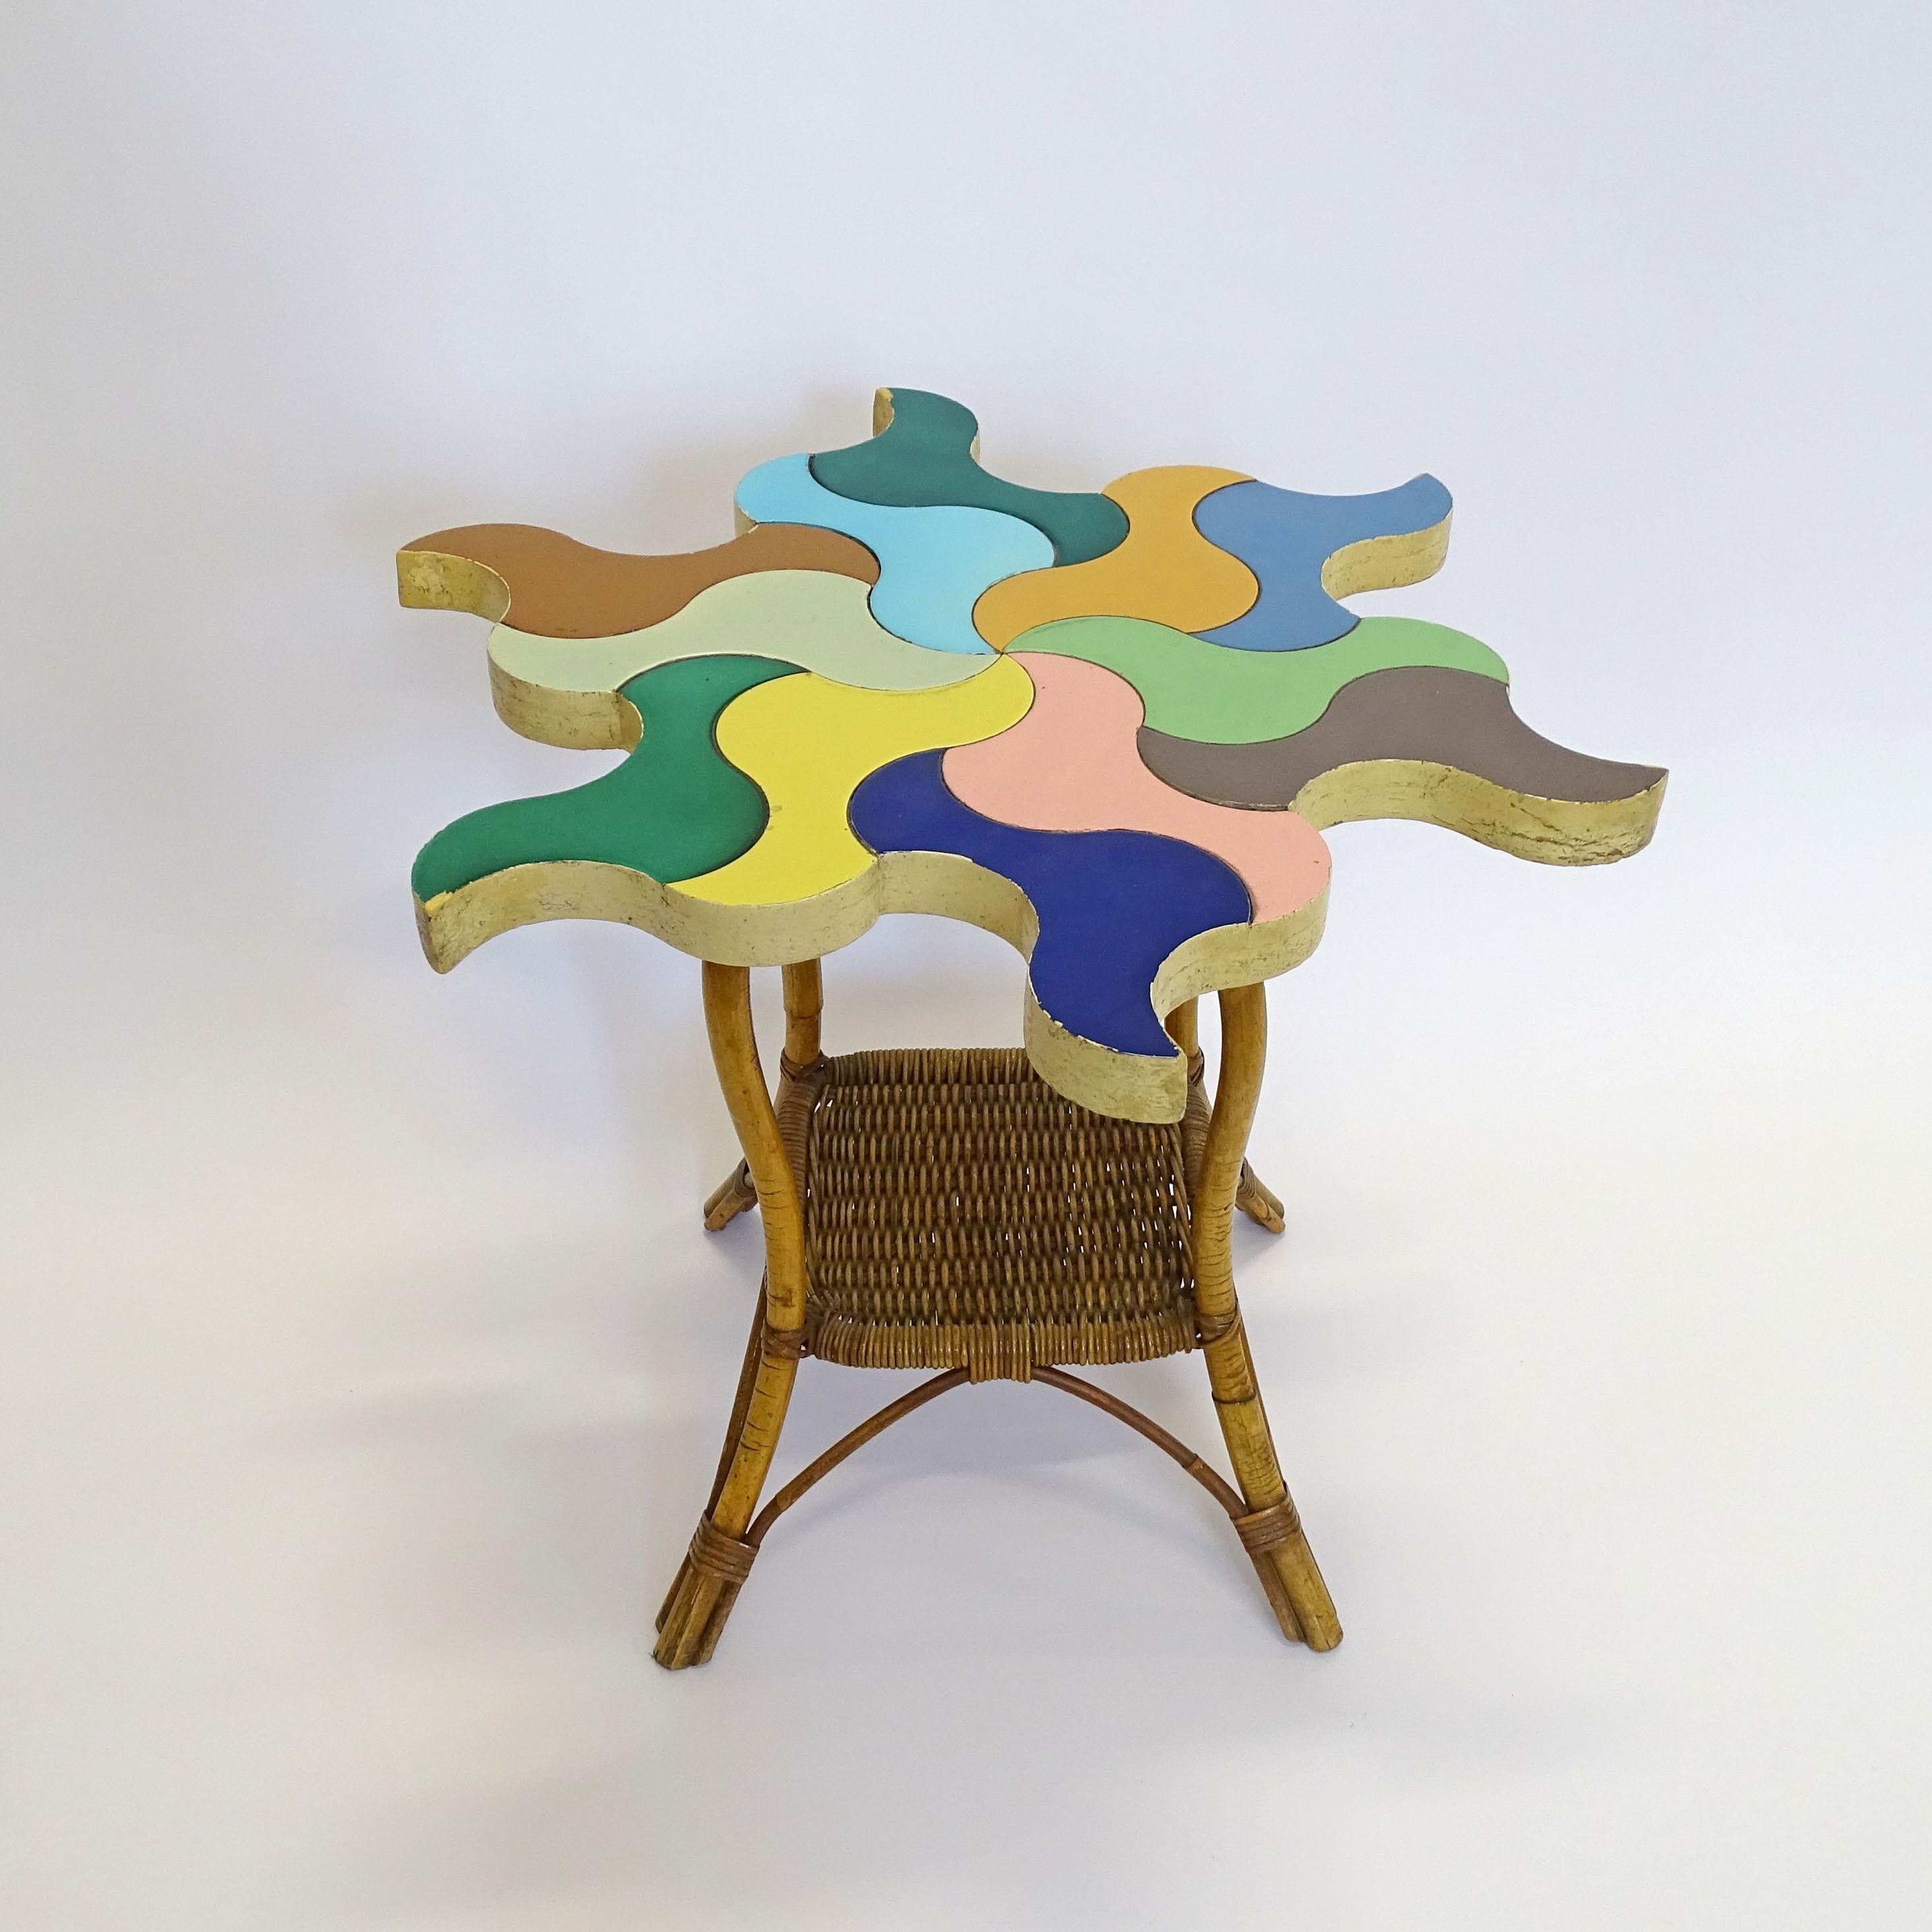 Marco Zanuso multicolour ceramic tiles top and wicker base side table, 
Italy 1950s.